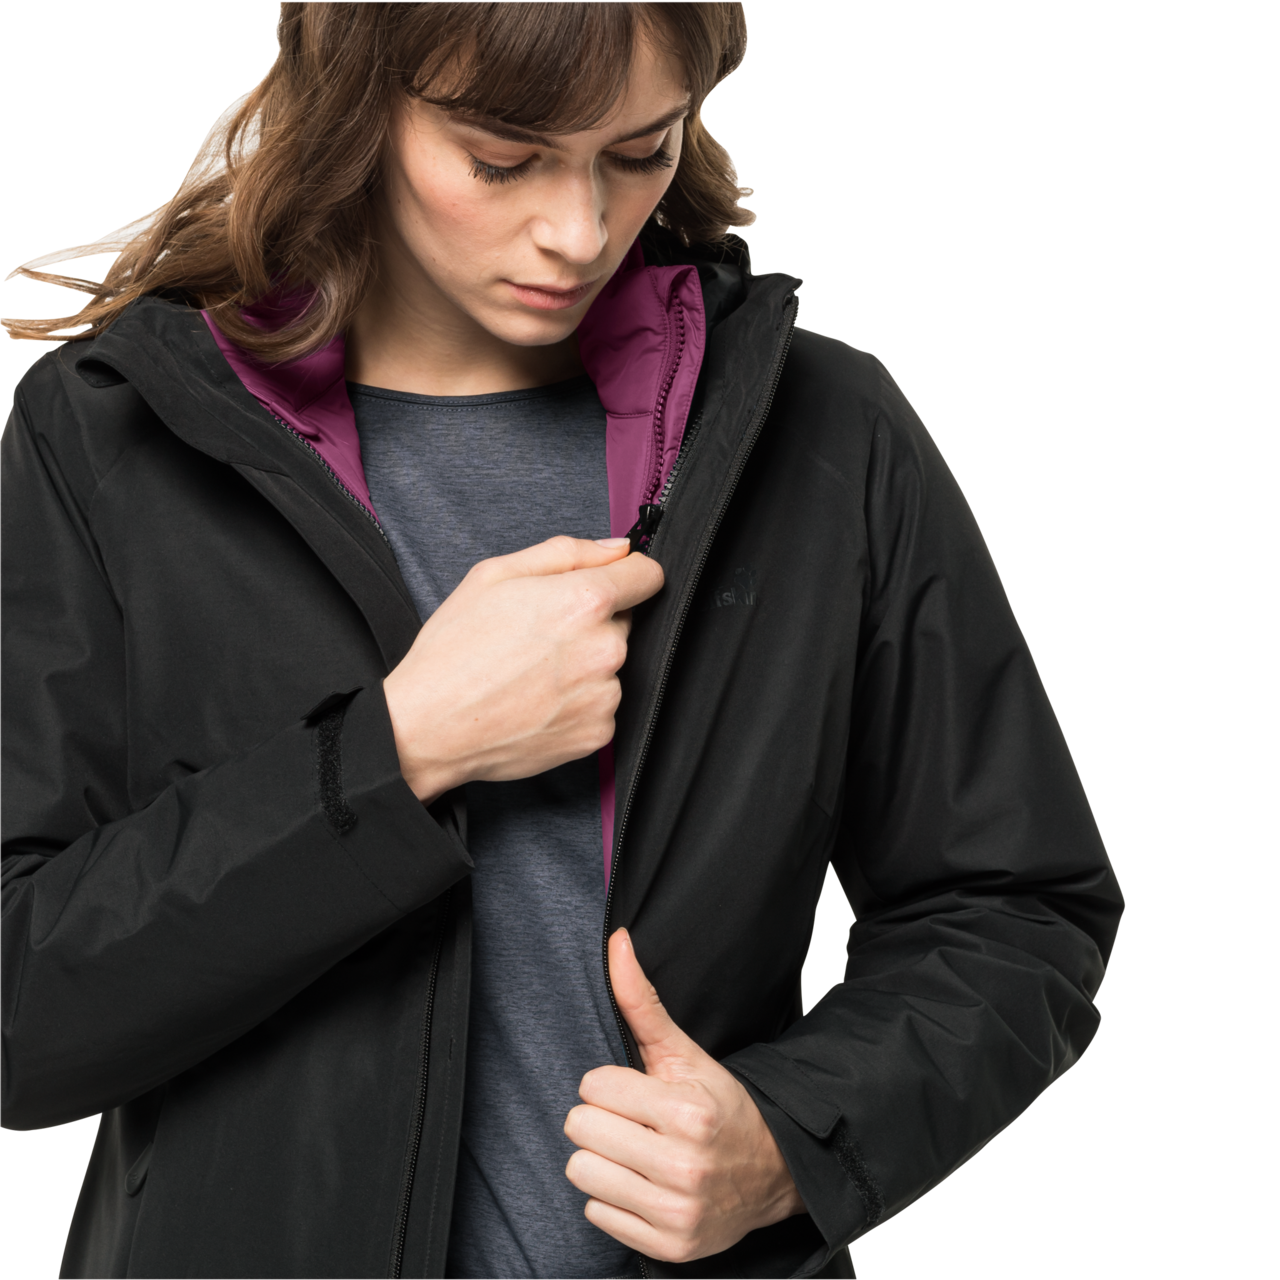 Women\'s Bergland Insulated Jacket | Jack Wolfskin